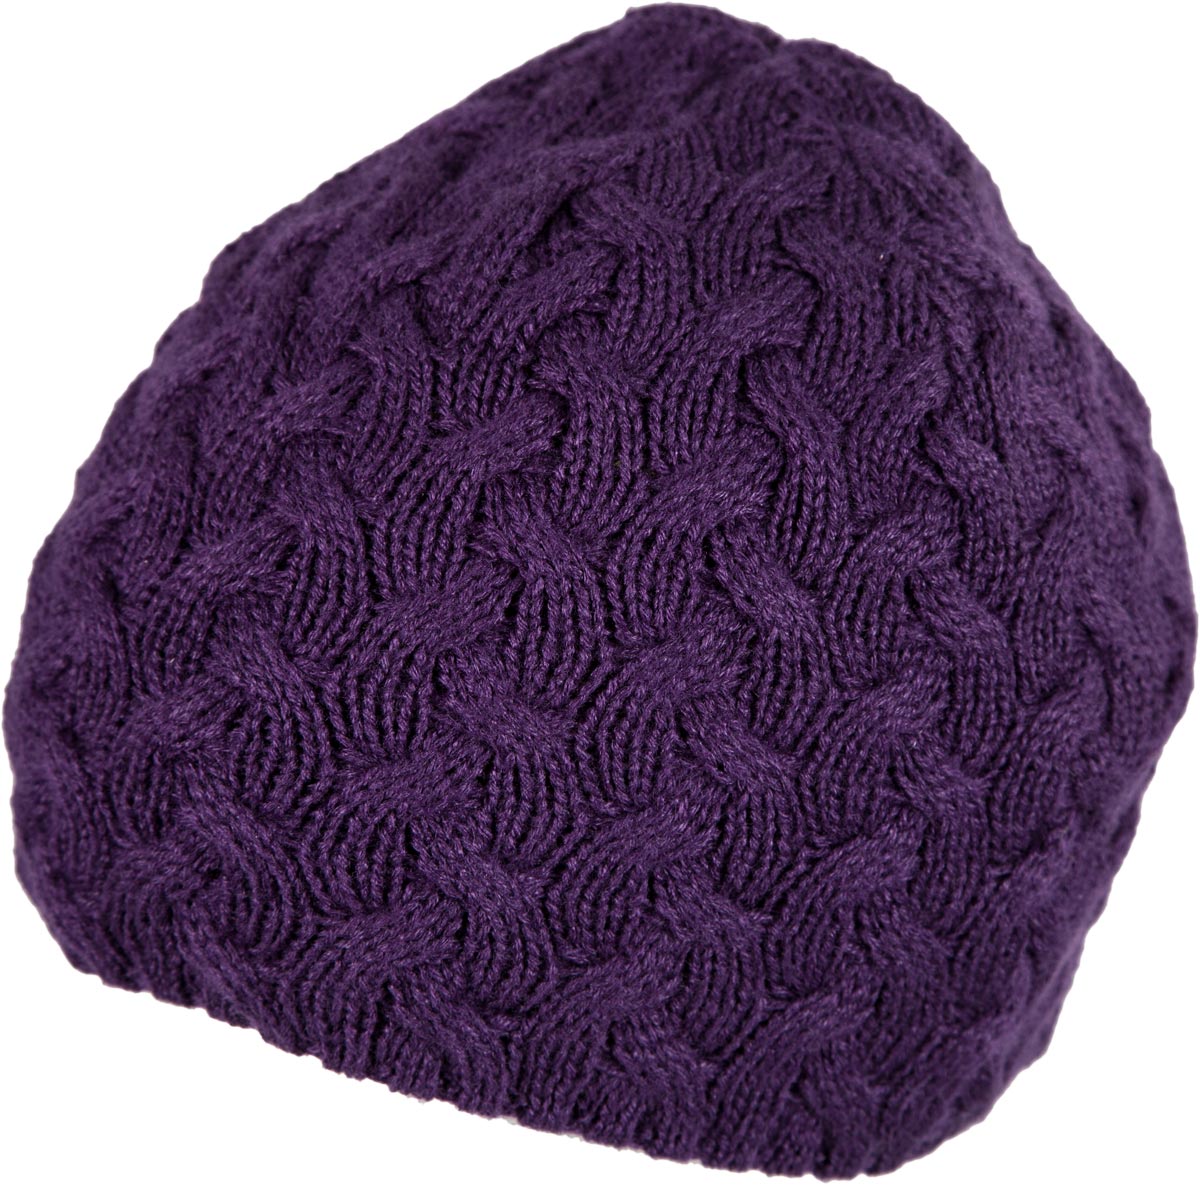 ALICE - Women’s knitted cap